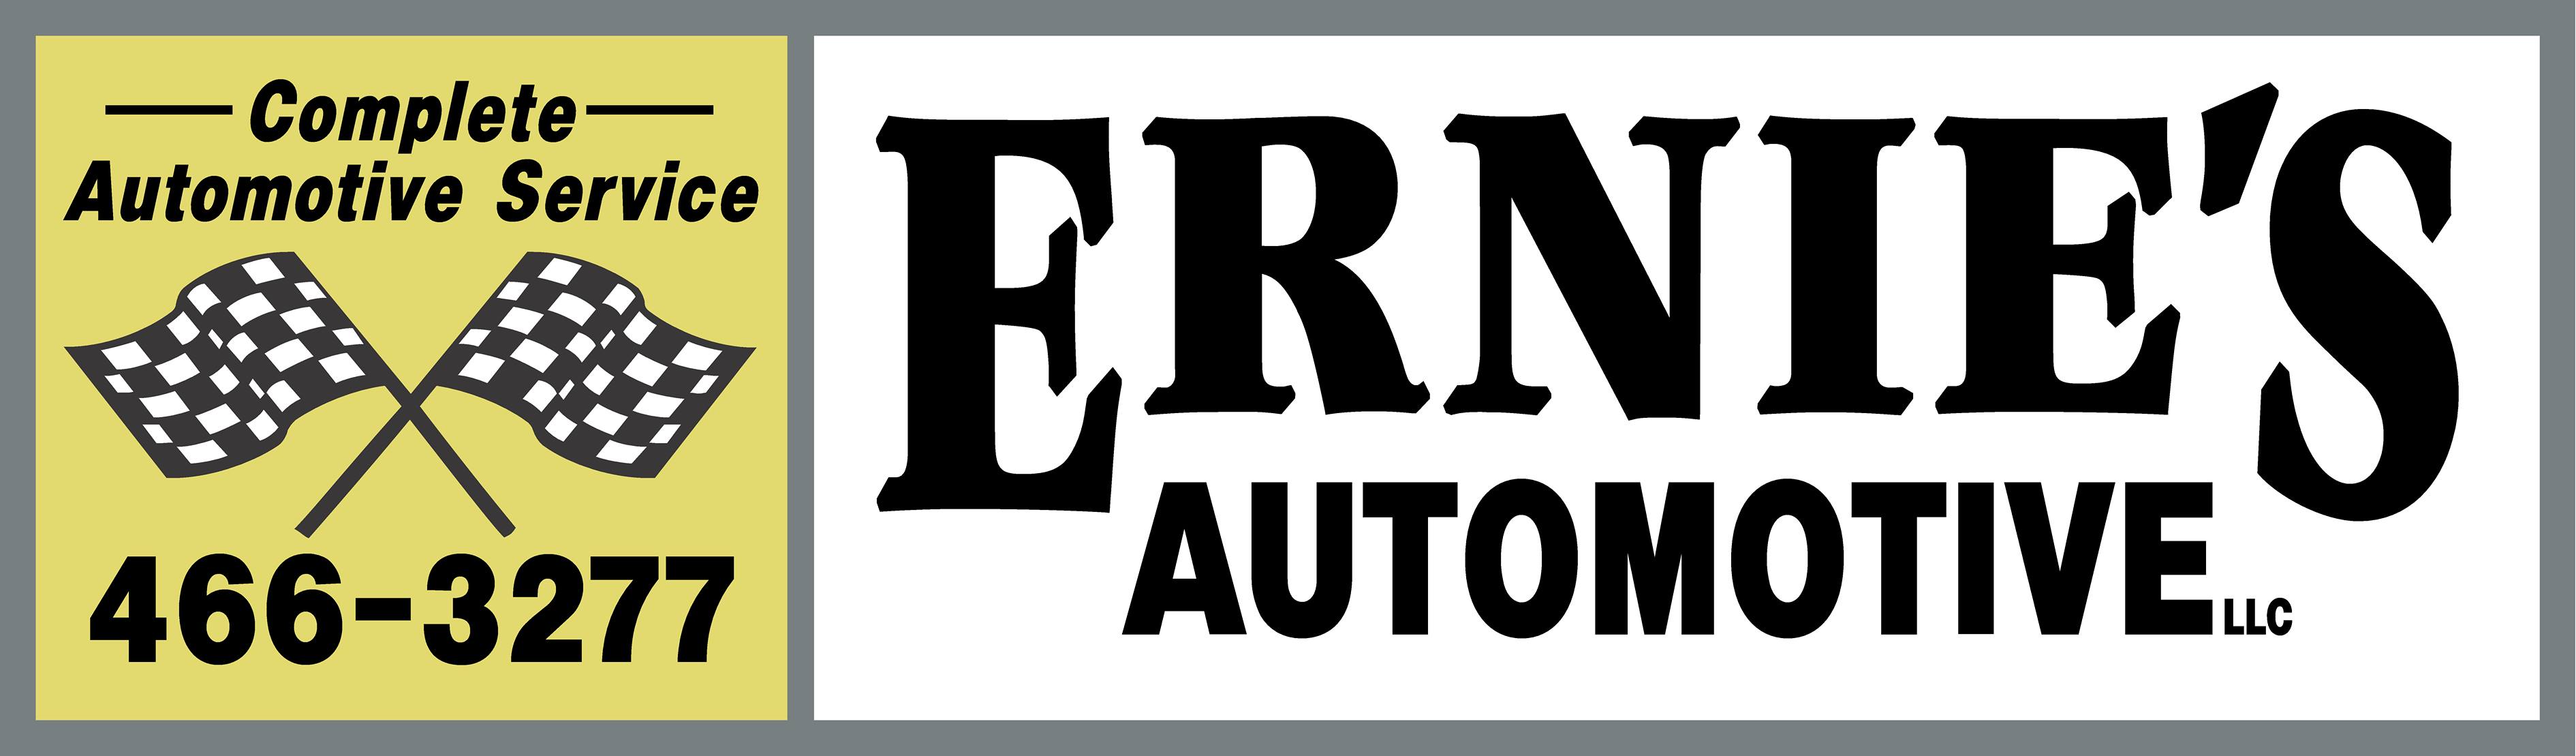 Ernie's Automotive LLC